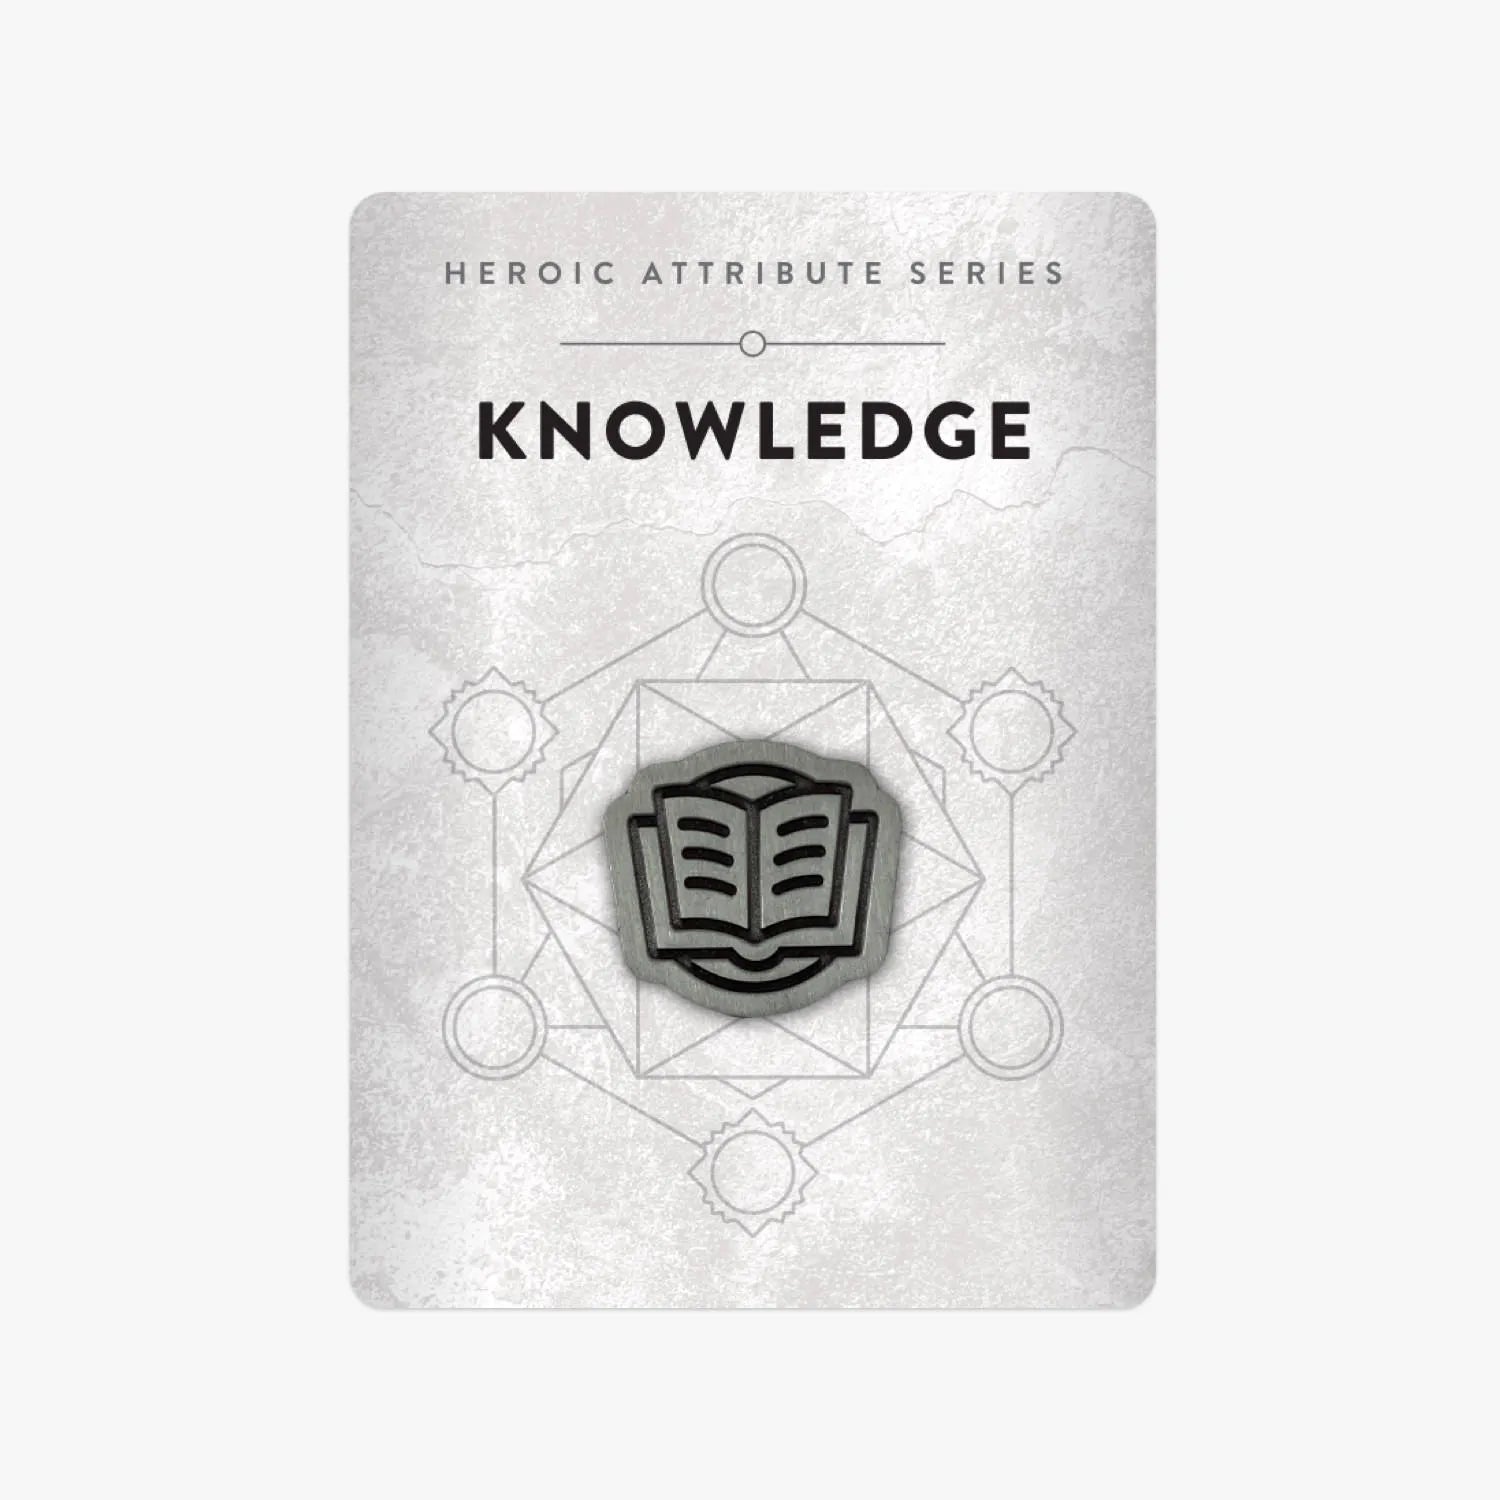 Heroic Attribute Series: Knowledge Pin